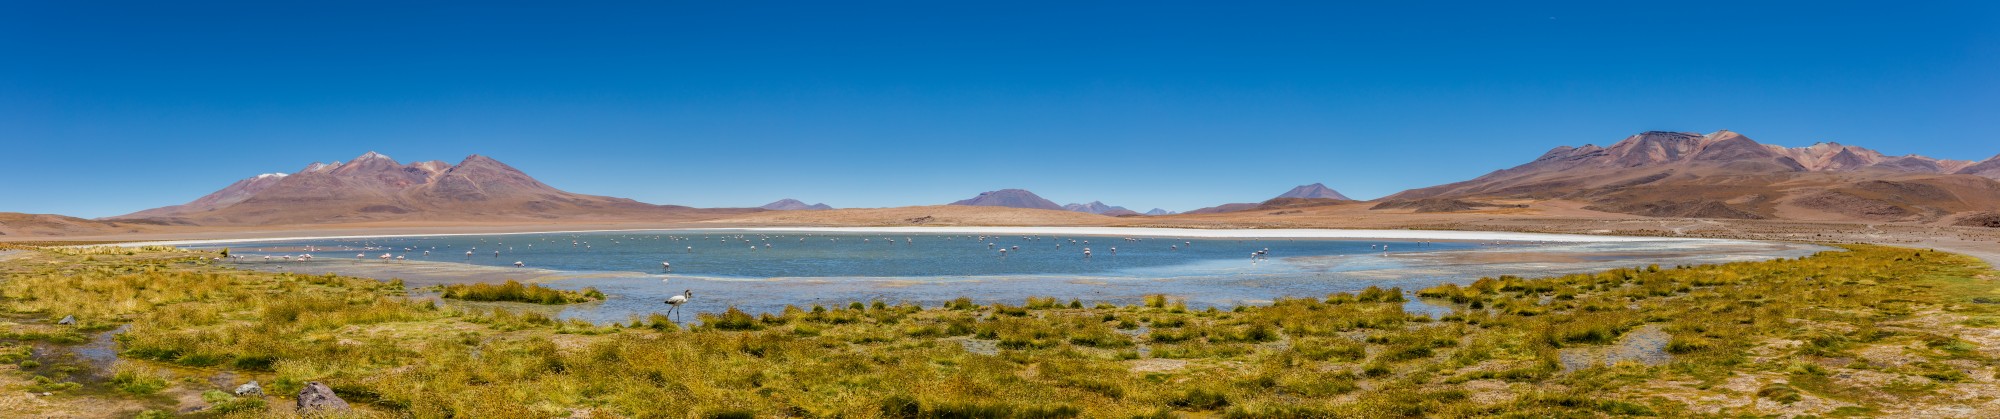 Laguna Cañapa, Bolivia, 2016-02-03, DD 70-74 PAN